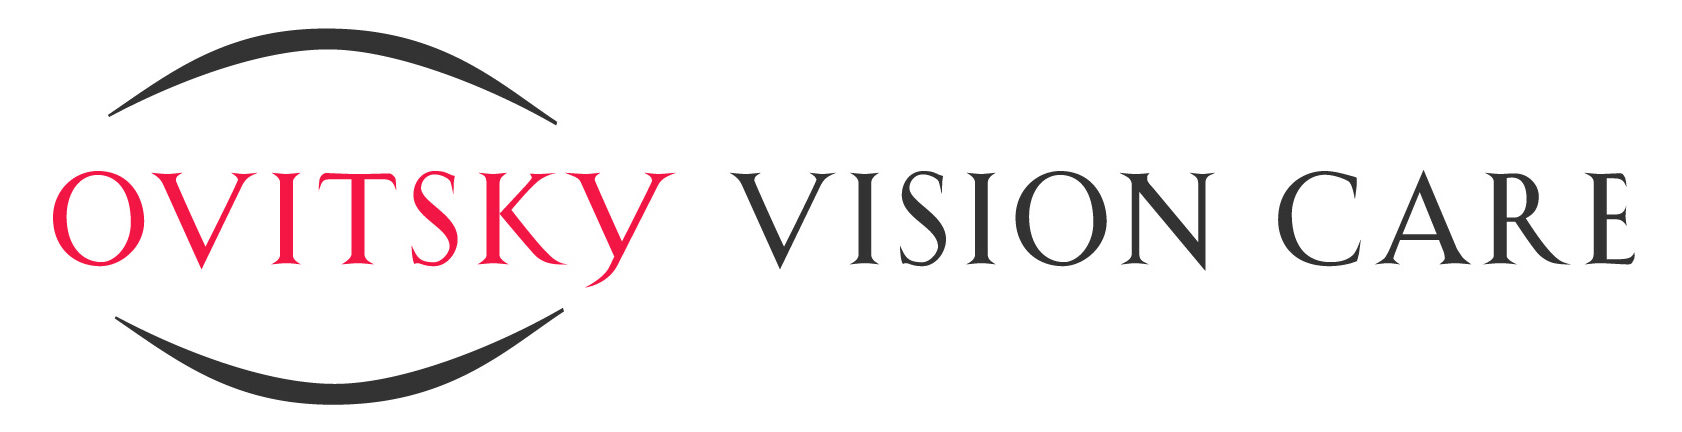 Ovitsky Vision Care